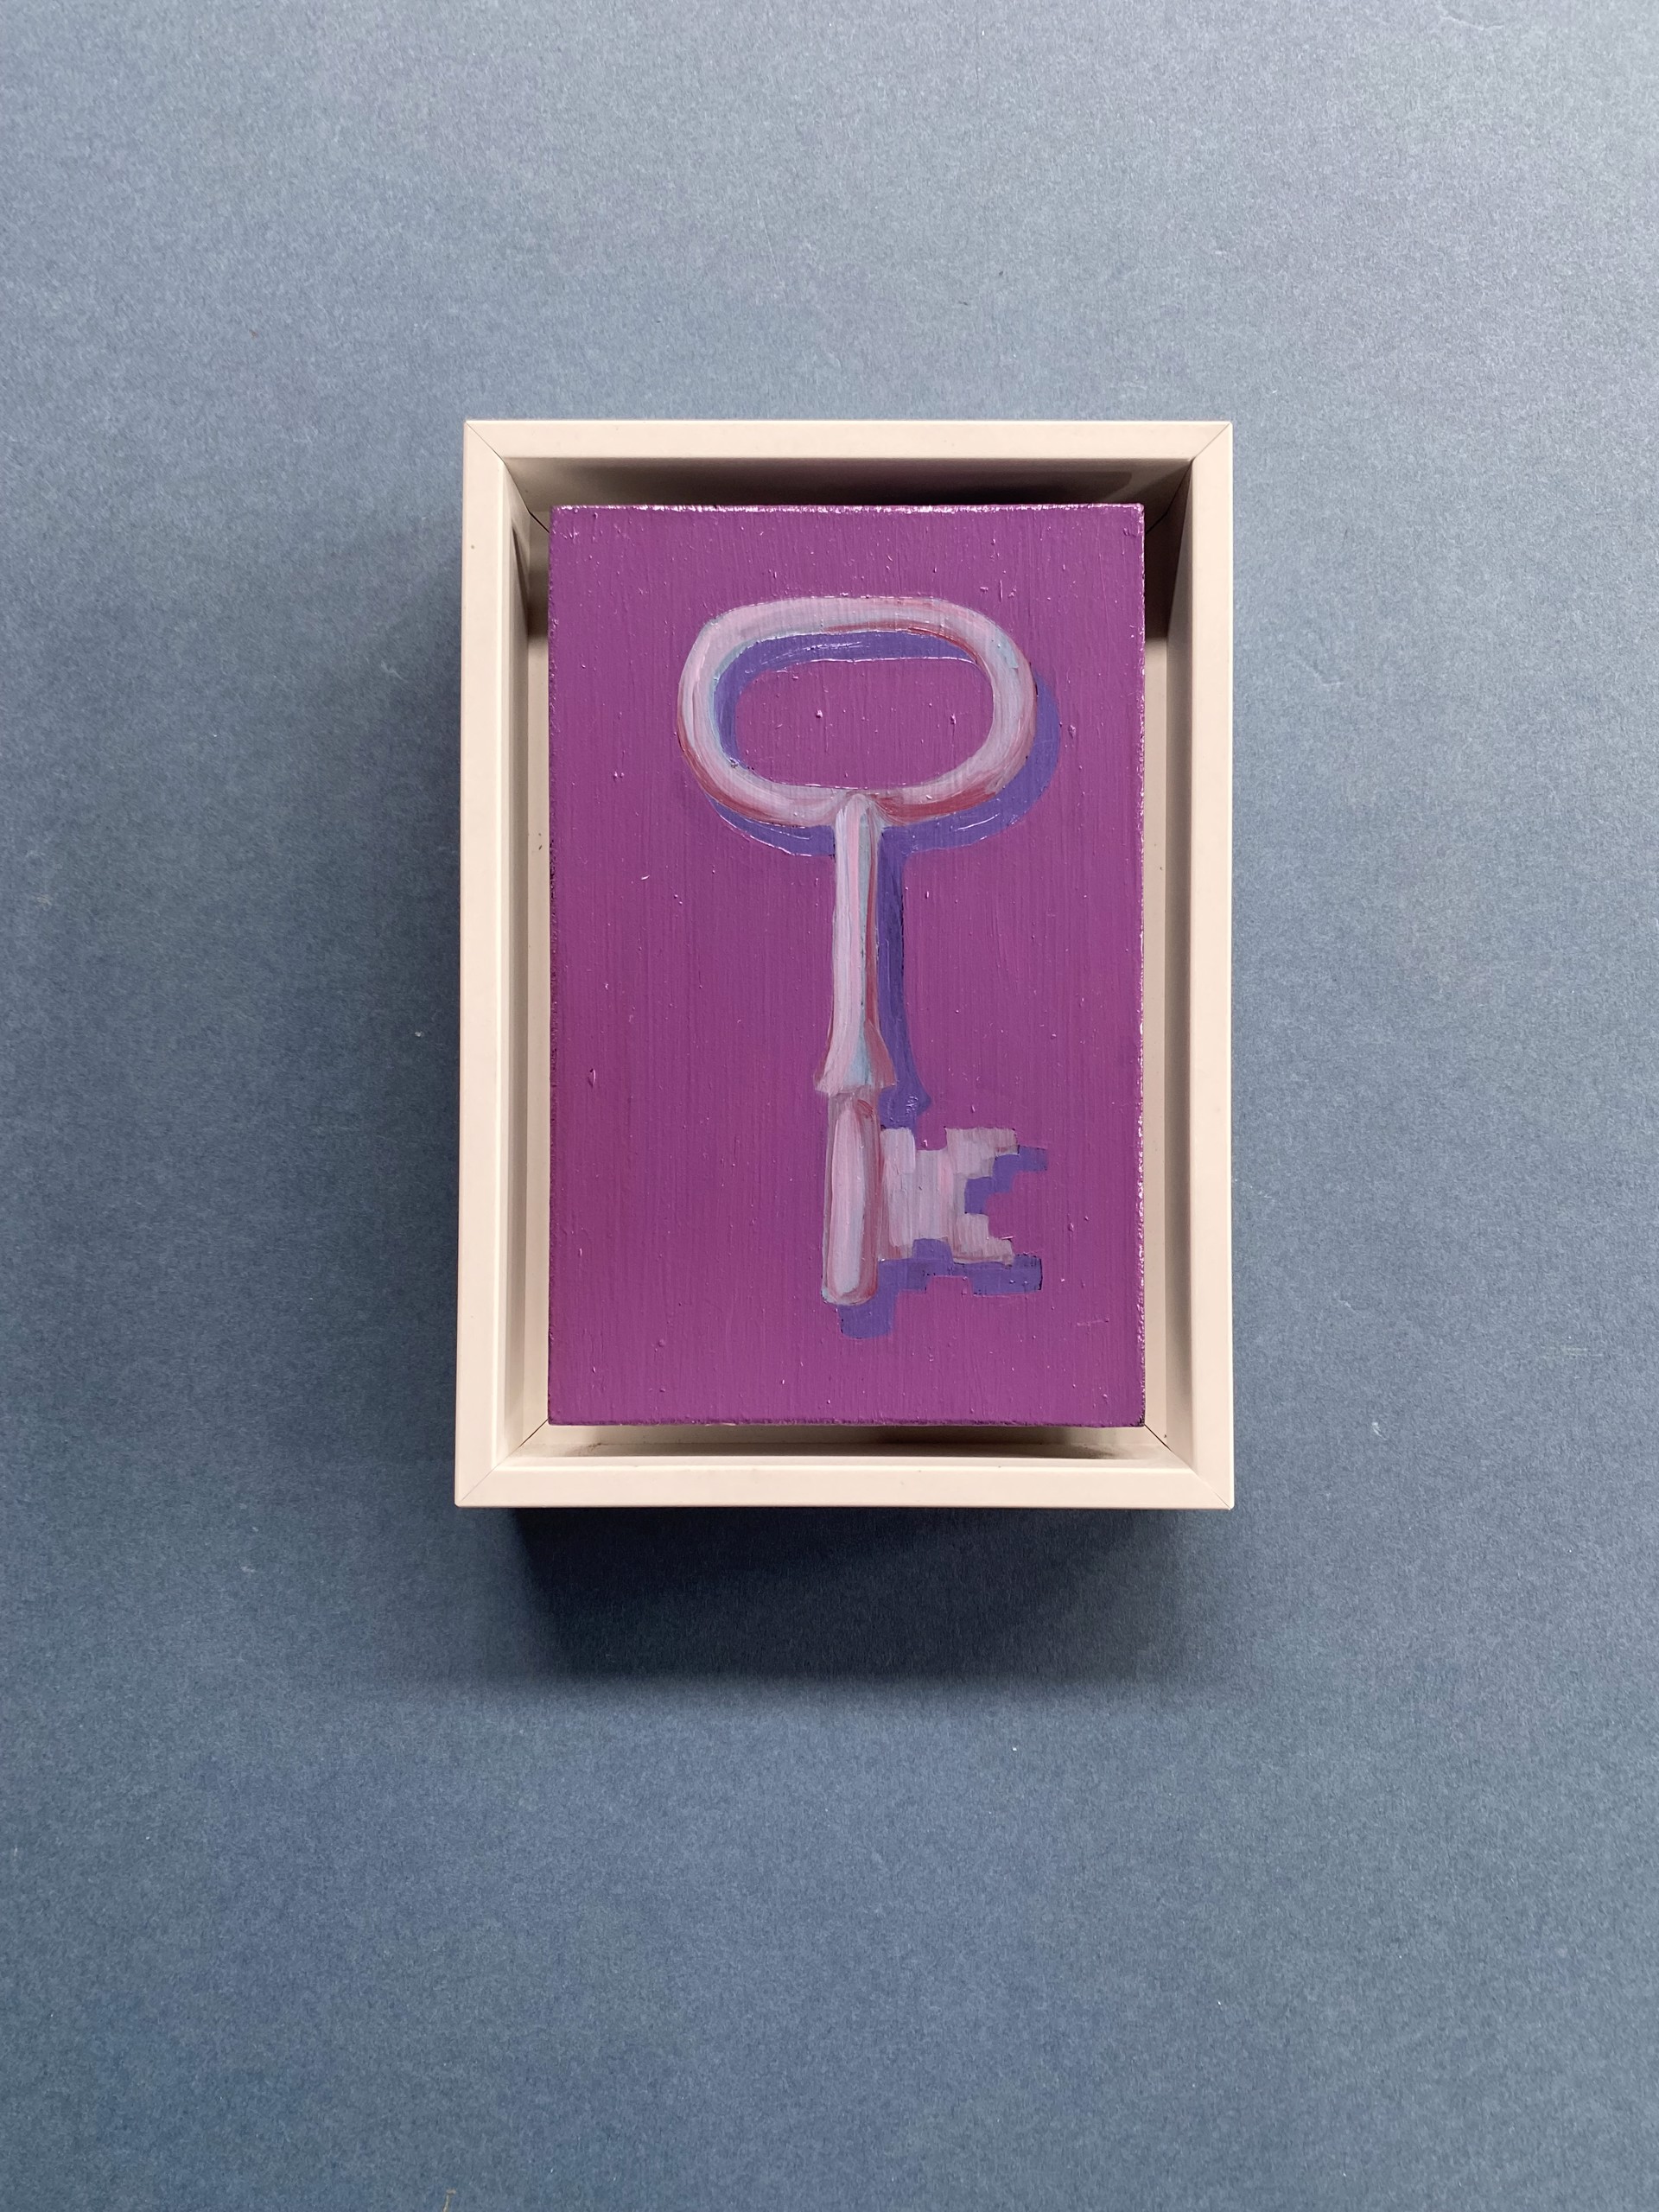 Key No. 27 by Stephen Wells